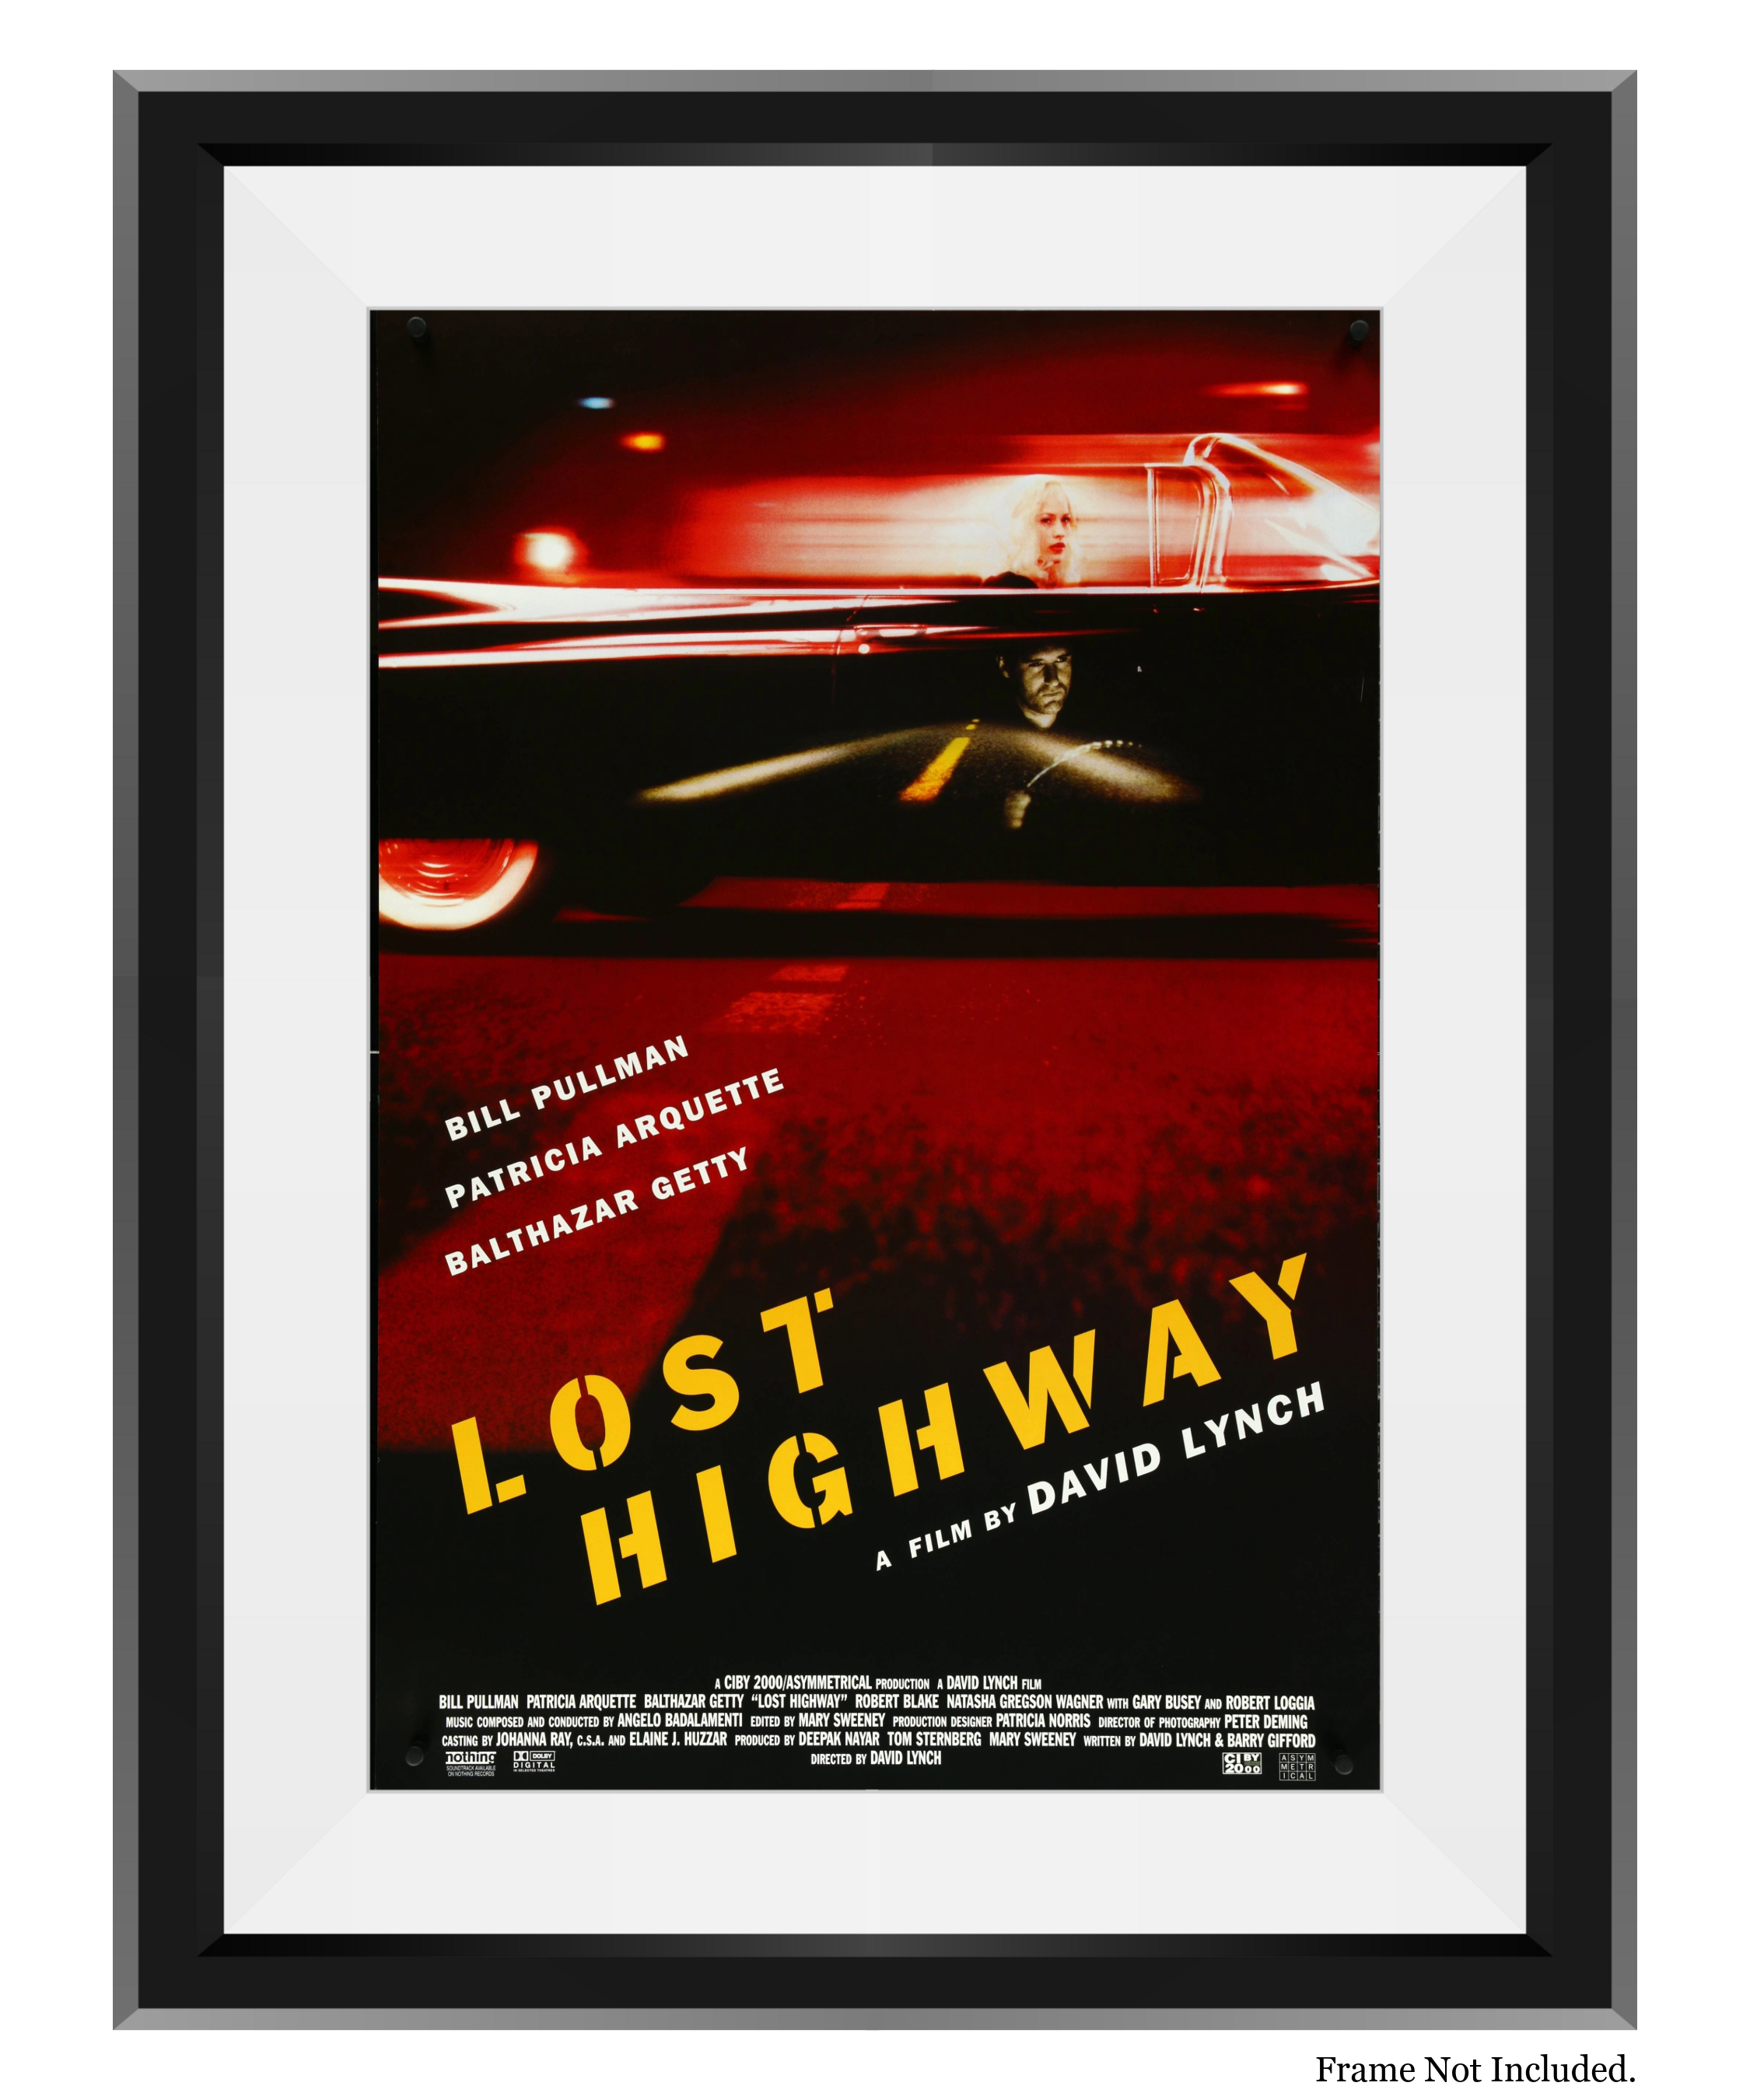 LOST HIGHWAY (1997)